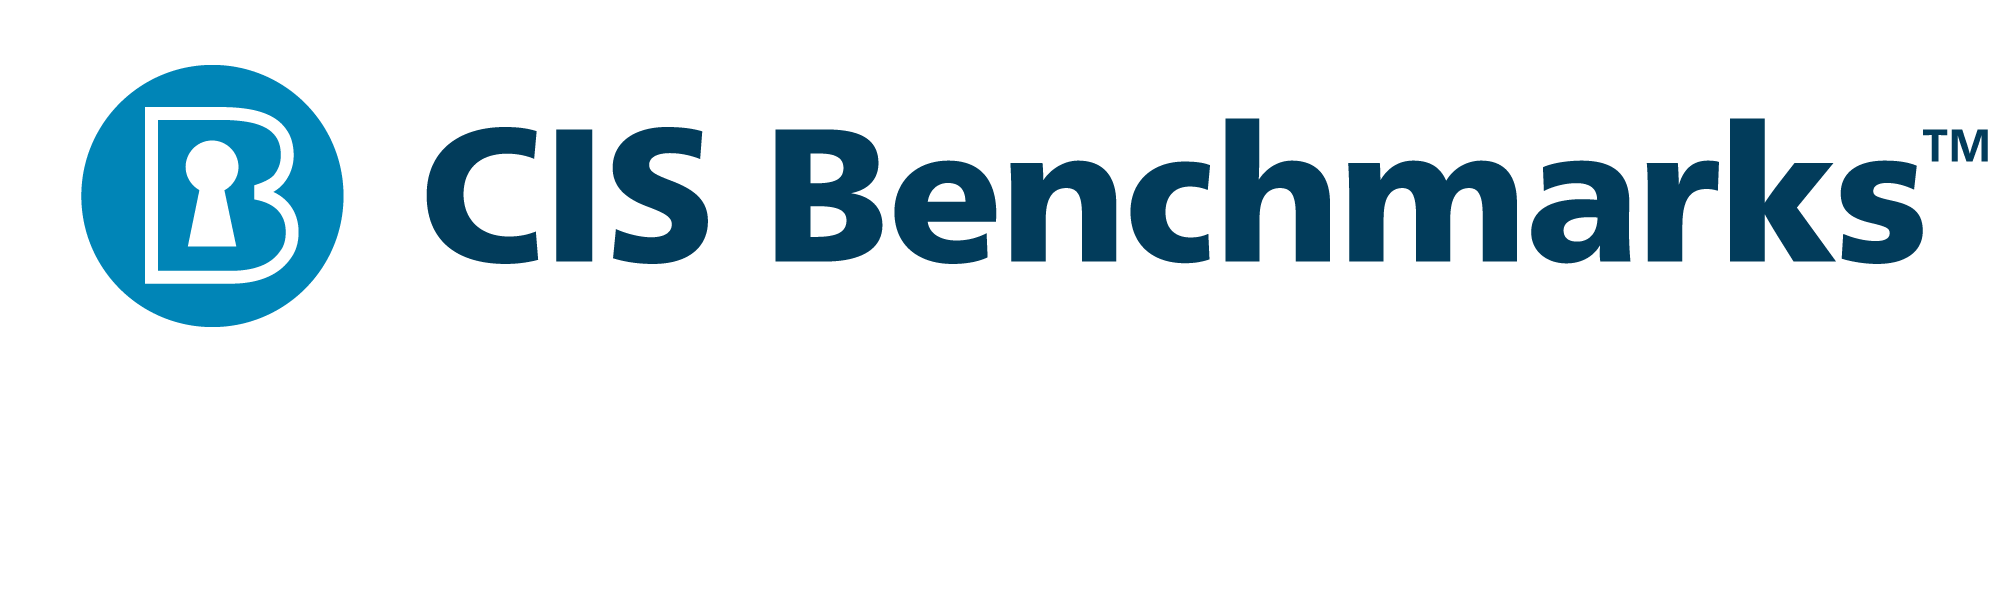 Benchmark Logo - CIS SUSE Linux Benchmark